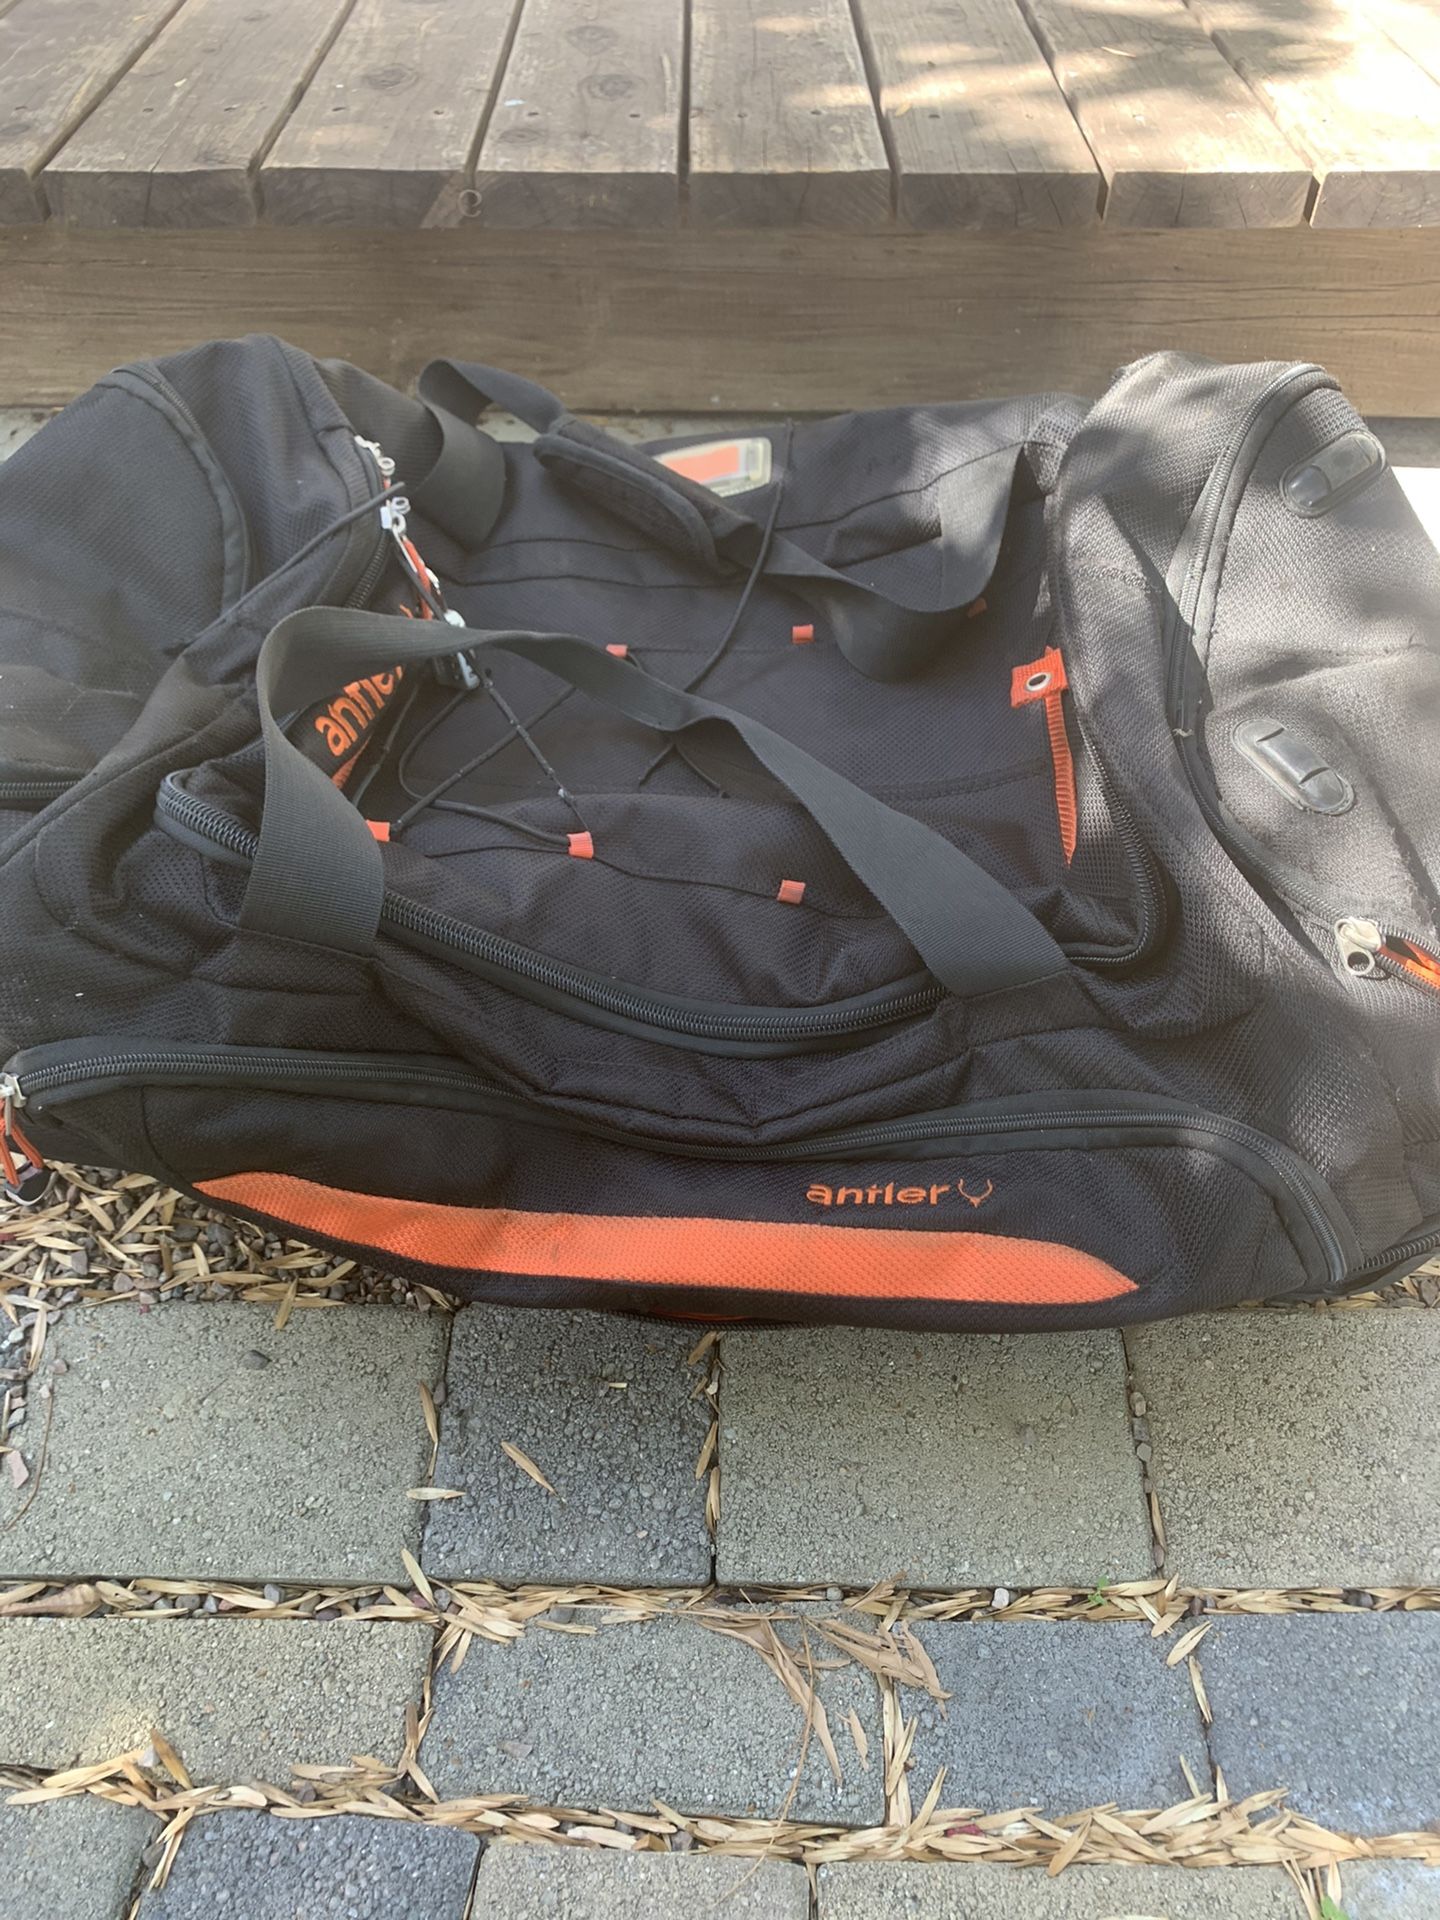 Antler Hard shell multi pocket sports bag with wheels